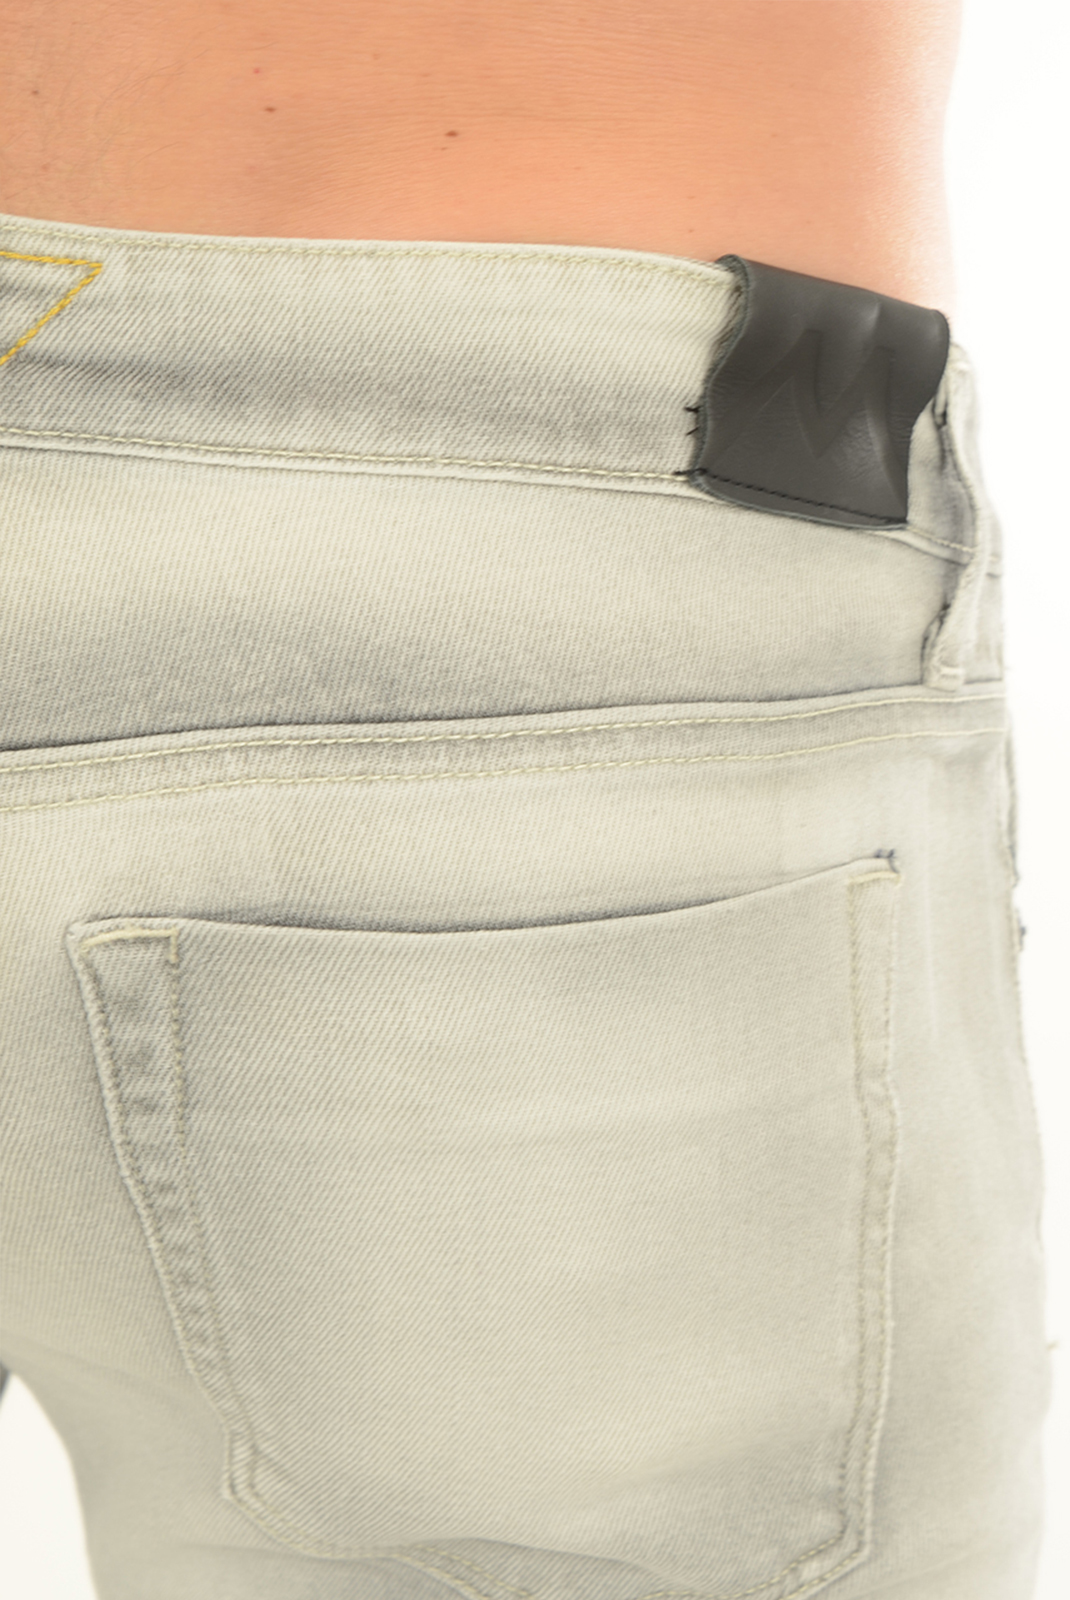 Jeans gris skinny stretch pour homme Meltin'pot  - Meret D1573